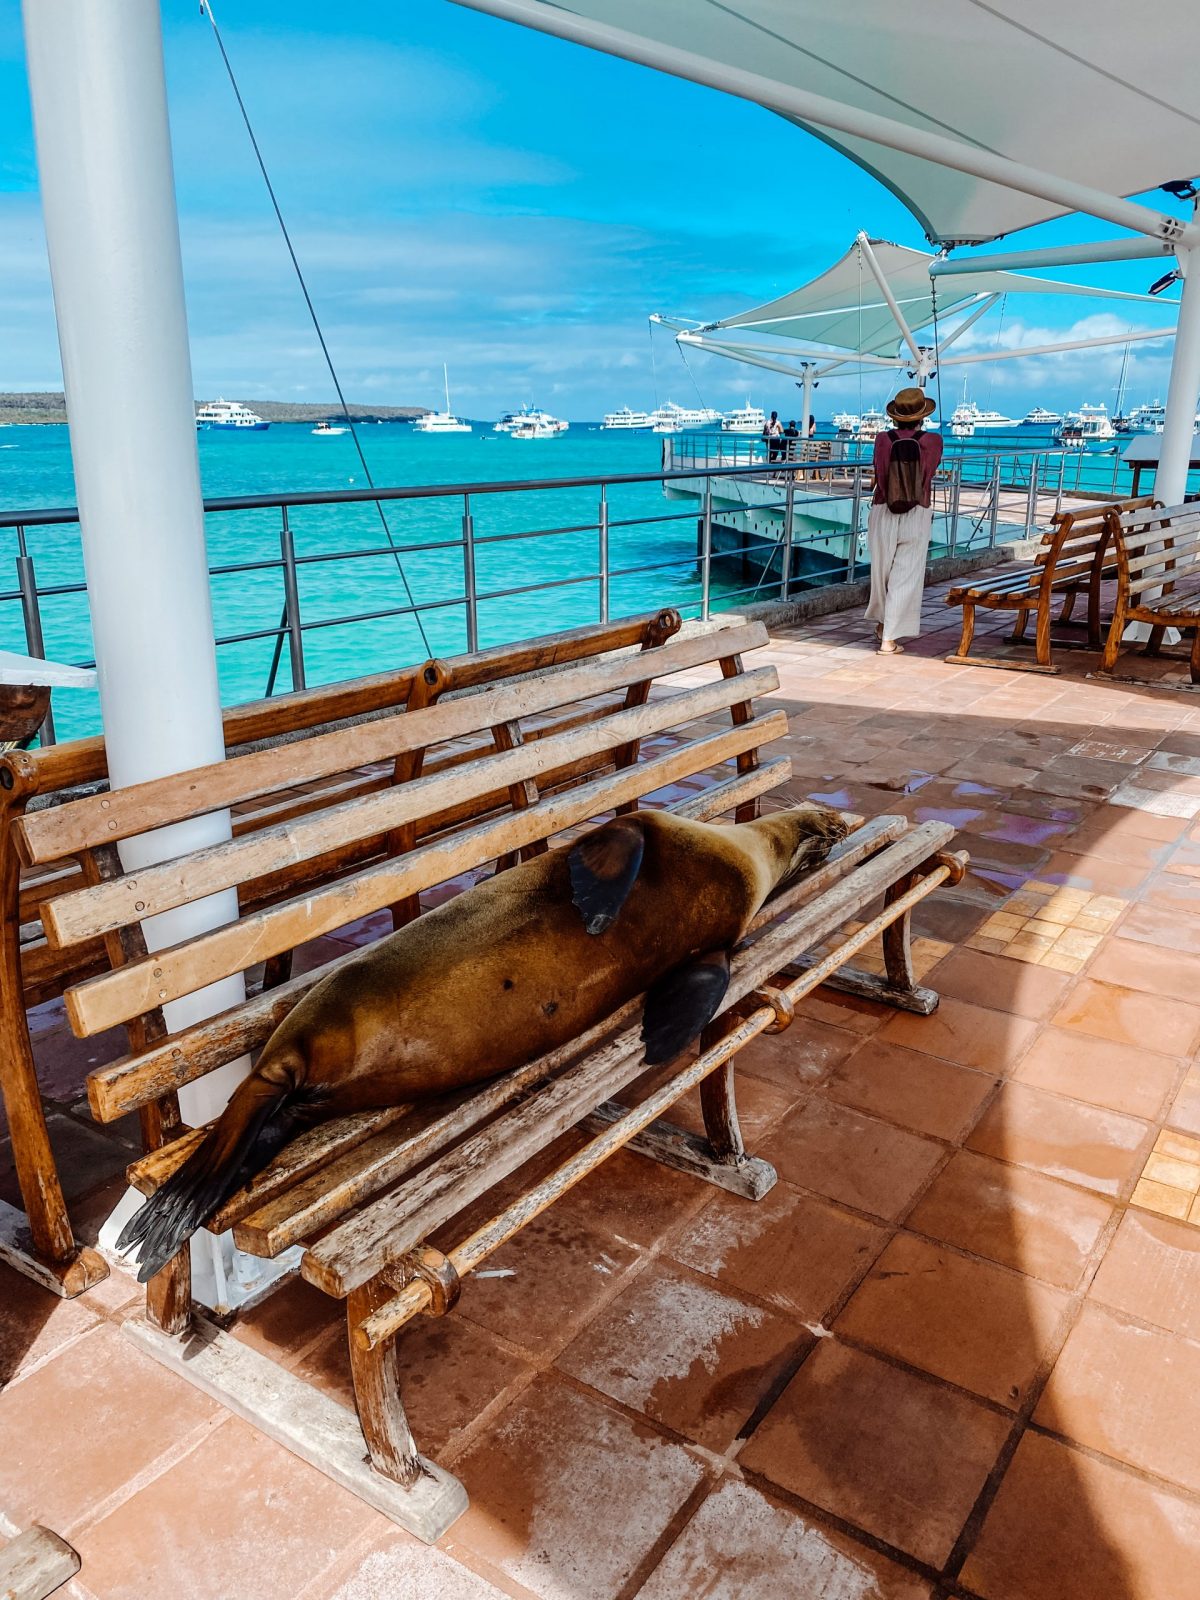 Sea lion sleeping on the bench, Galapagos Islands in Puerto Ayora (Santa Cruz)